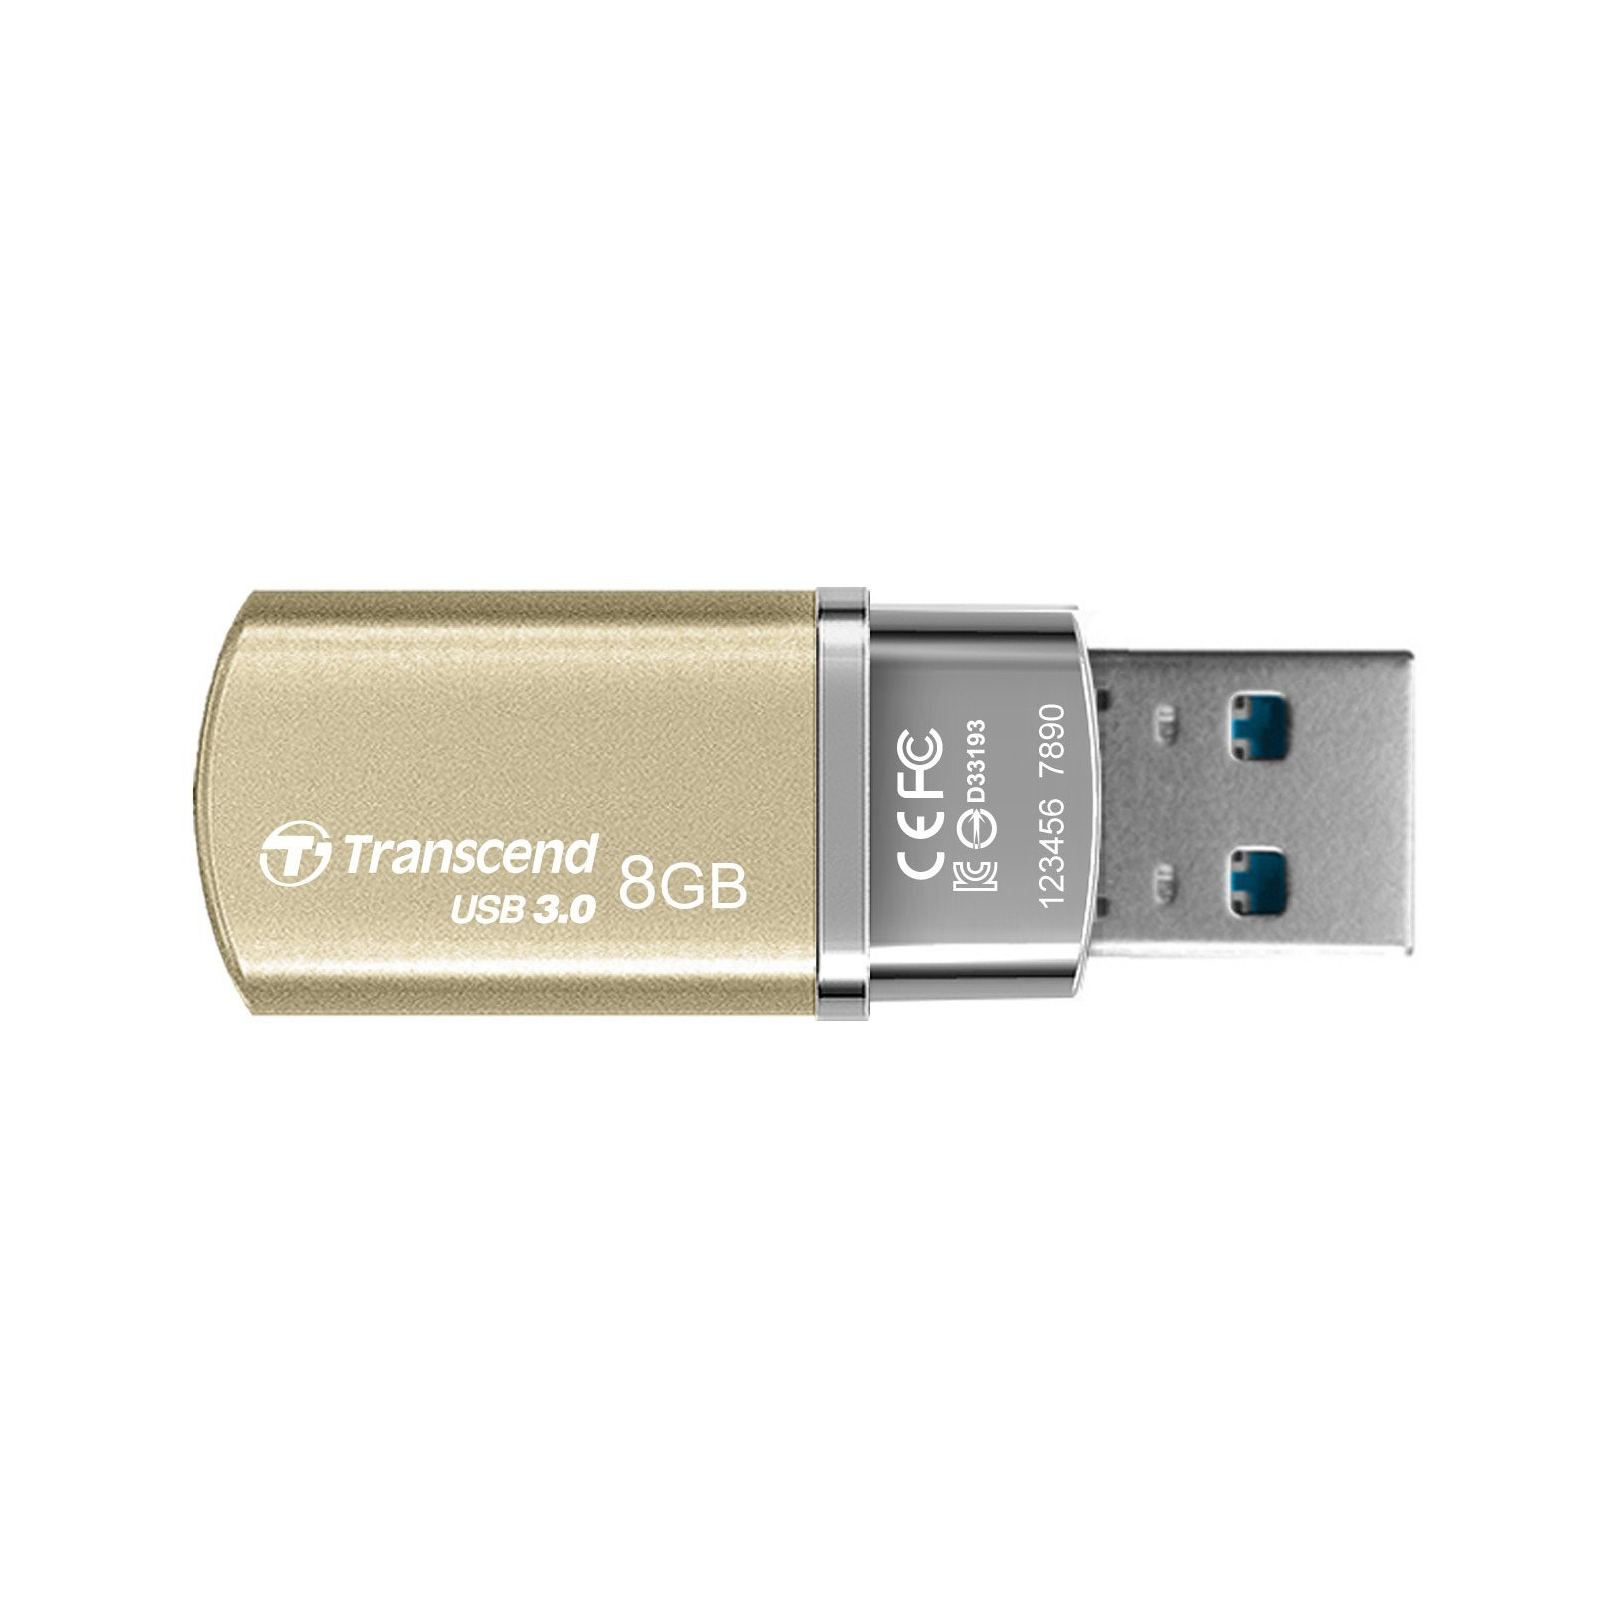 USB флеш накопитель Transcend 8GB JetFlash 820 USB 3.0 (TS8GJF820G) изображение 2